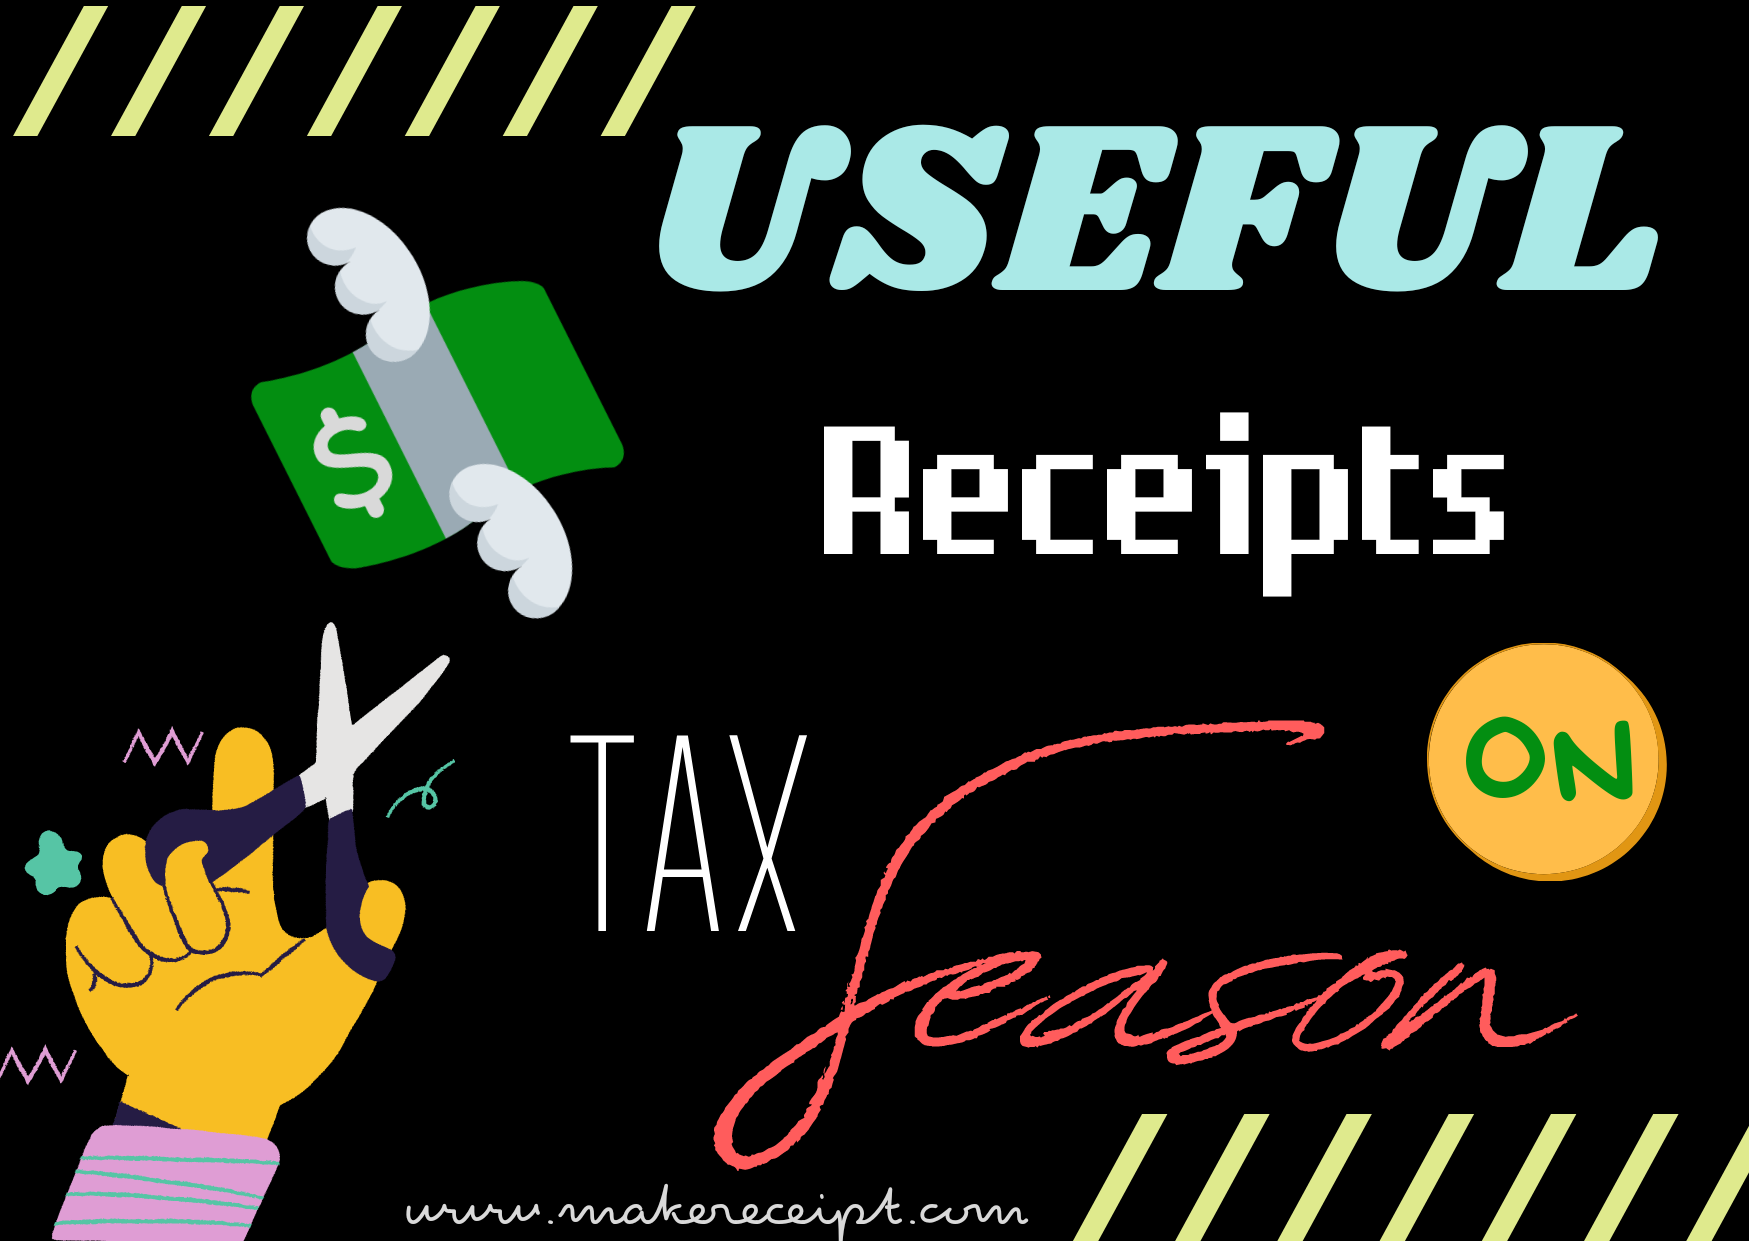 Useful Receipts for Tax Season